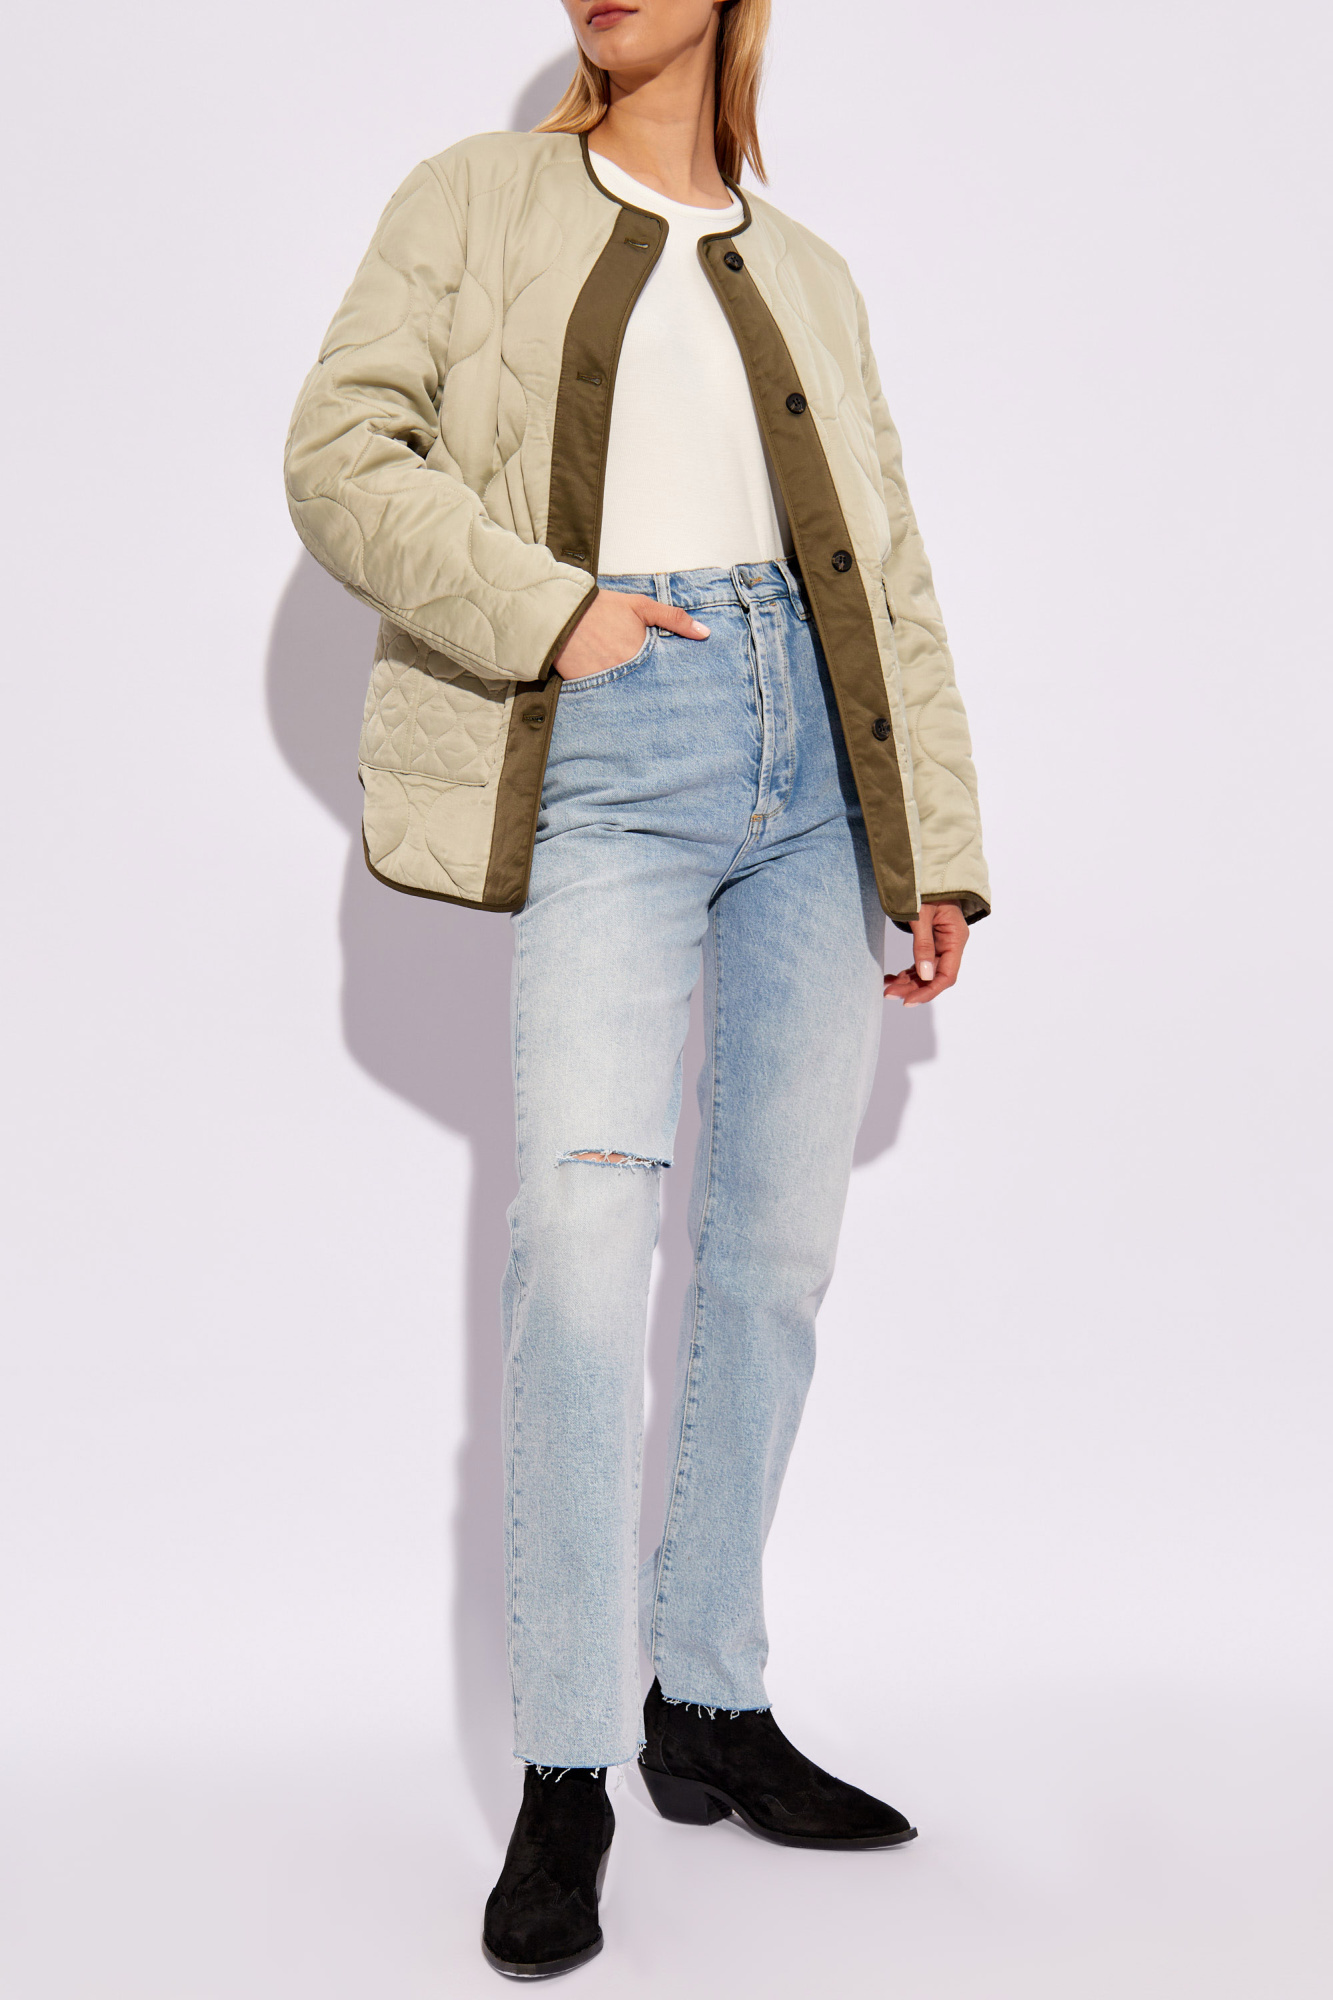 AllSaints ‘Foxi Liner’ Sherpa jacket